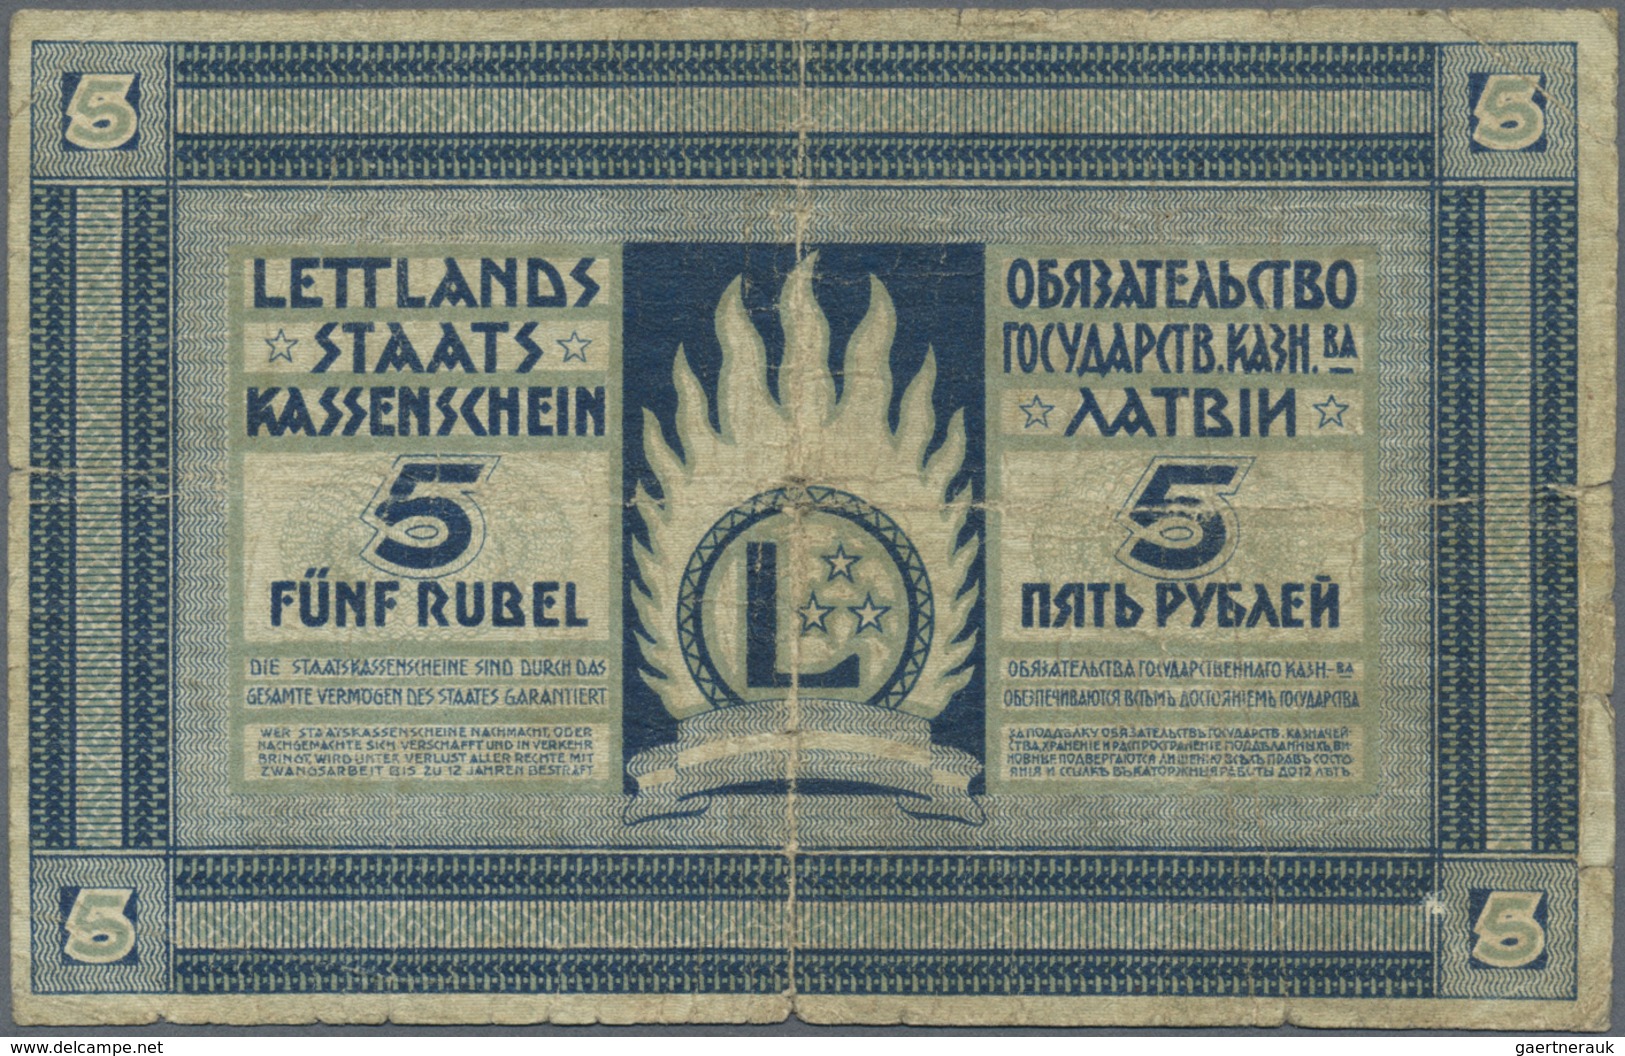 Latvia / Lettland: 5 Rubli 1919 Seldom Seen Series "K", P. 3f, Signature Kalnings, Only 25449 Notes - Latvia